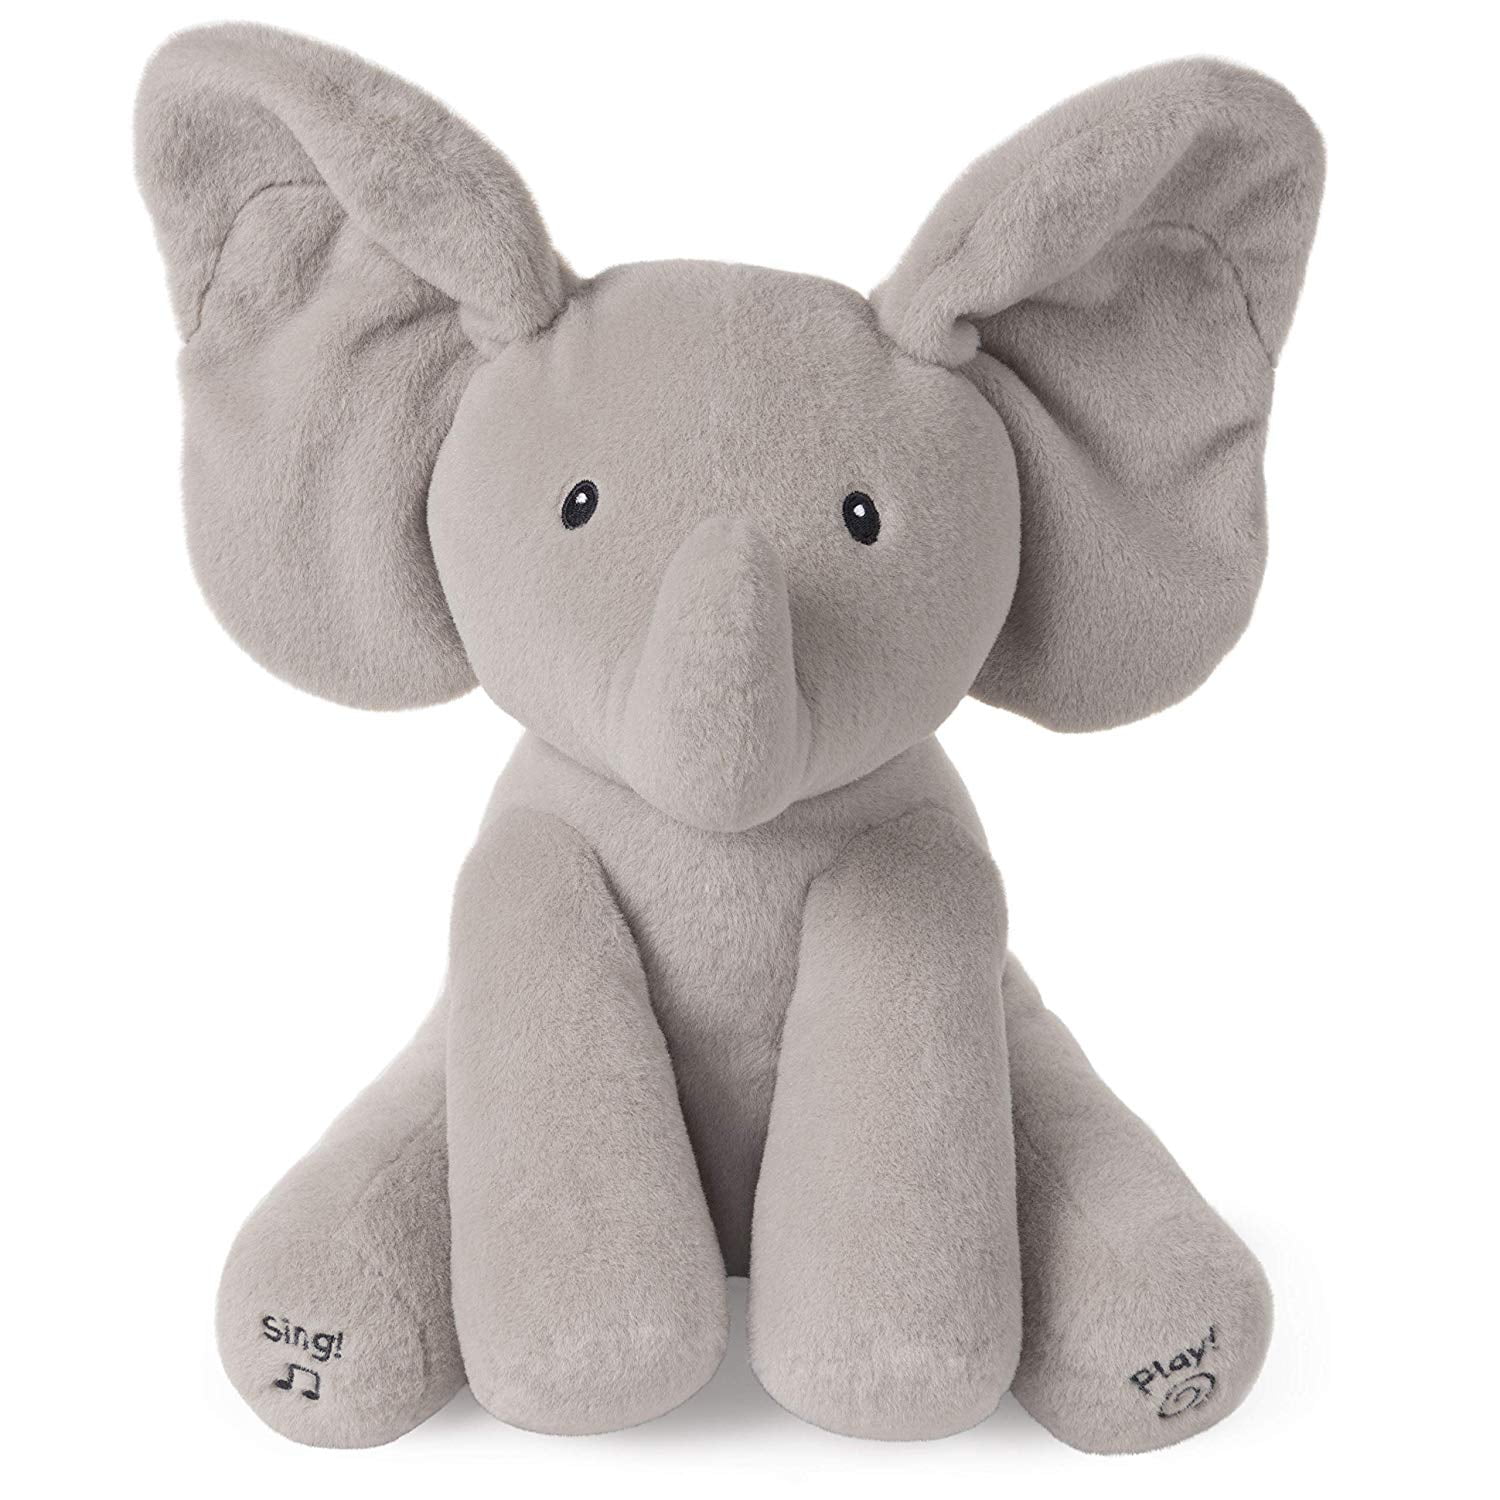 New Peek-a-boo Elephant Baby Pal Animated Flappy The Elephant Music Plush Toy 